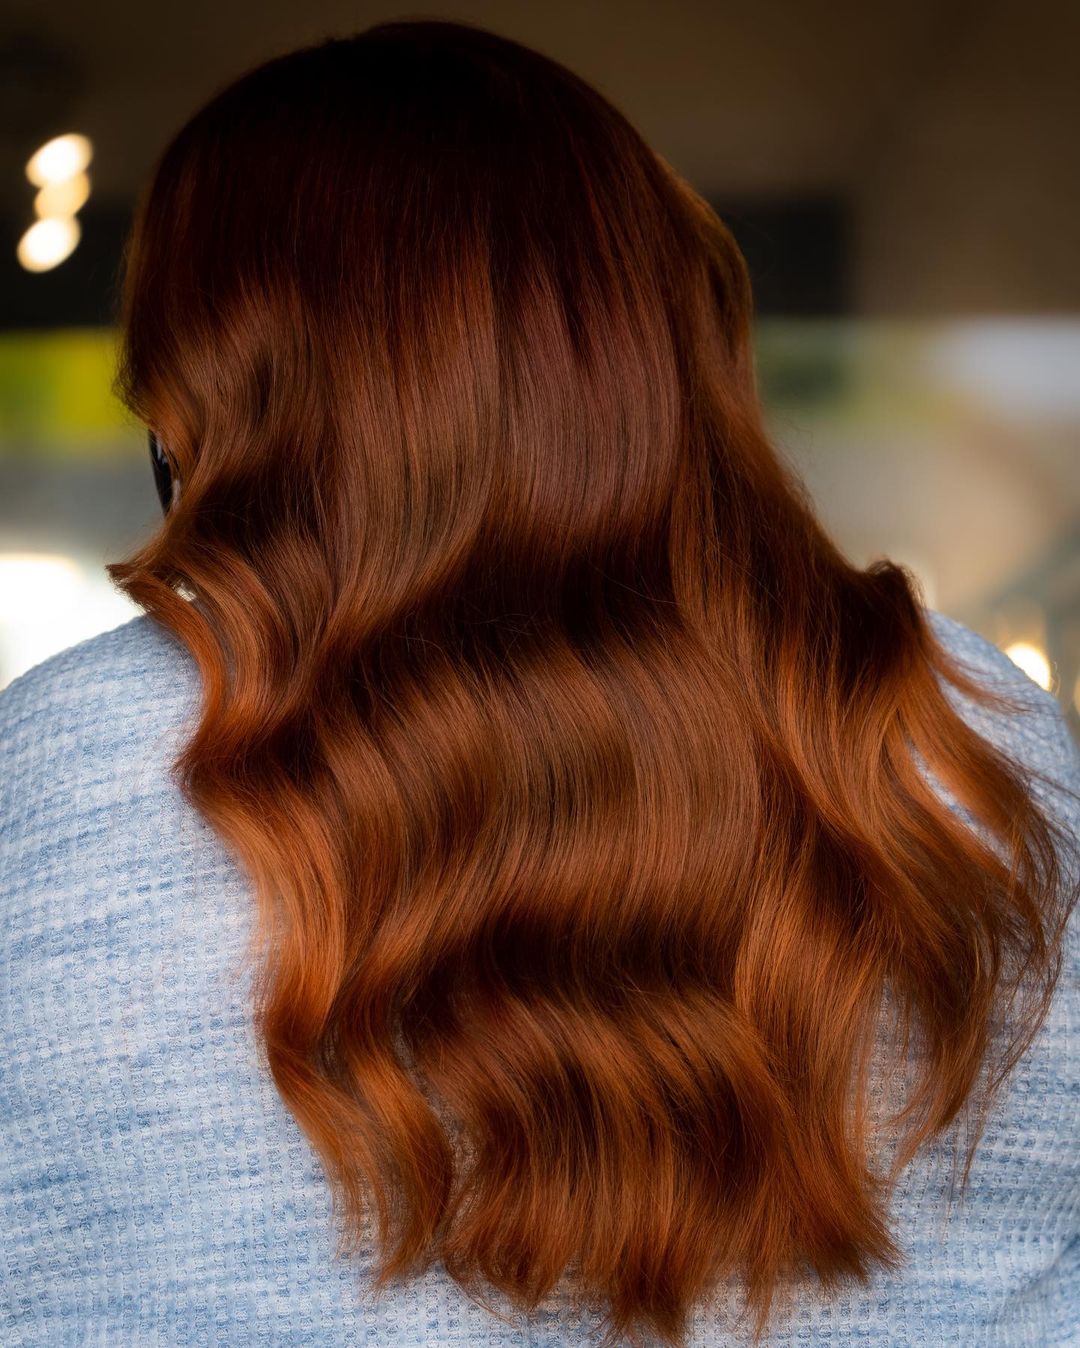 Reddish Brown On Long Wavy Hair